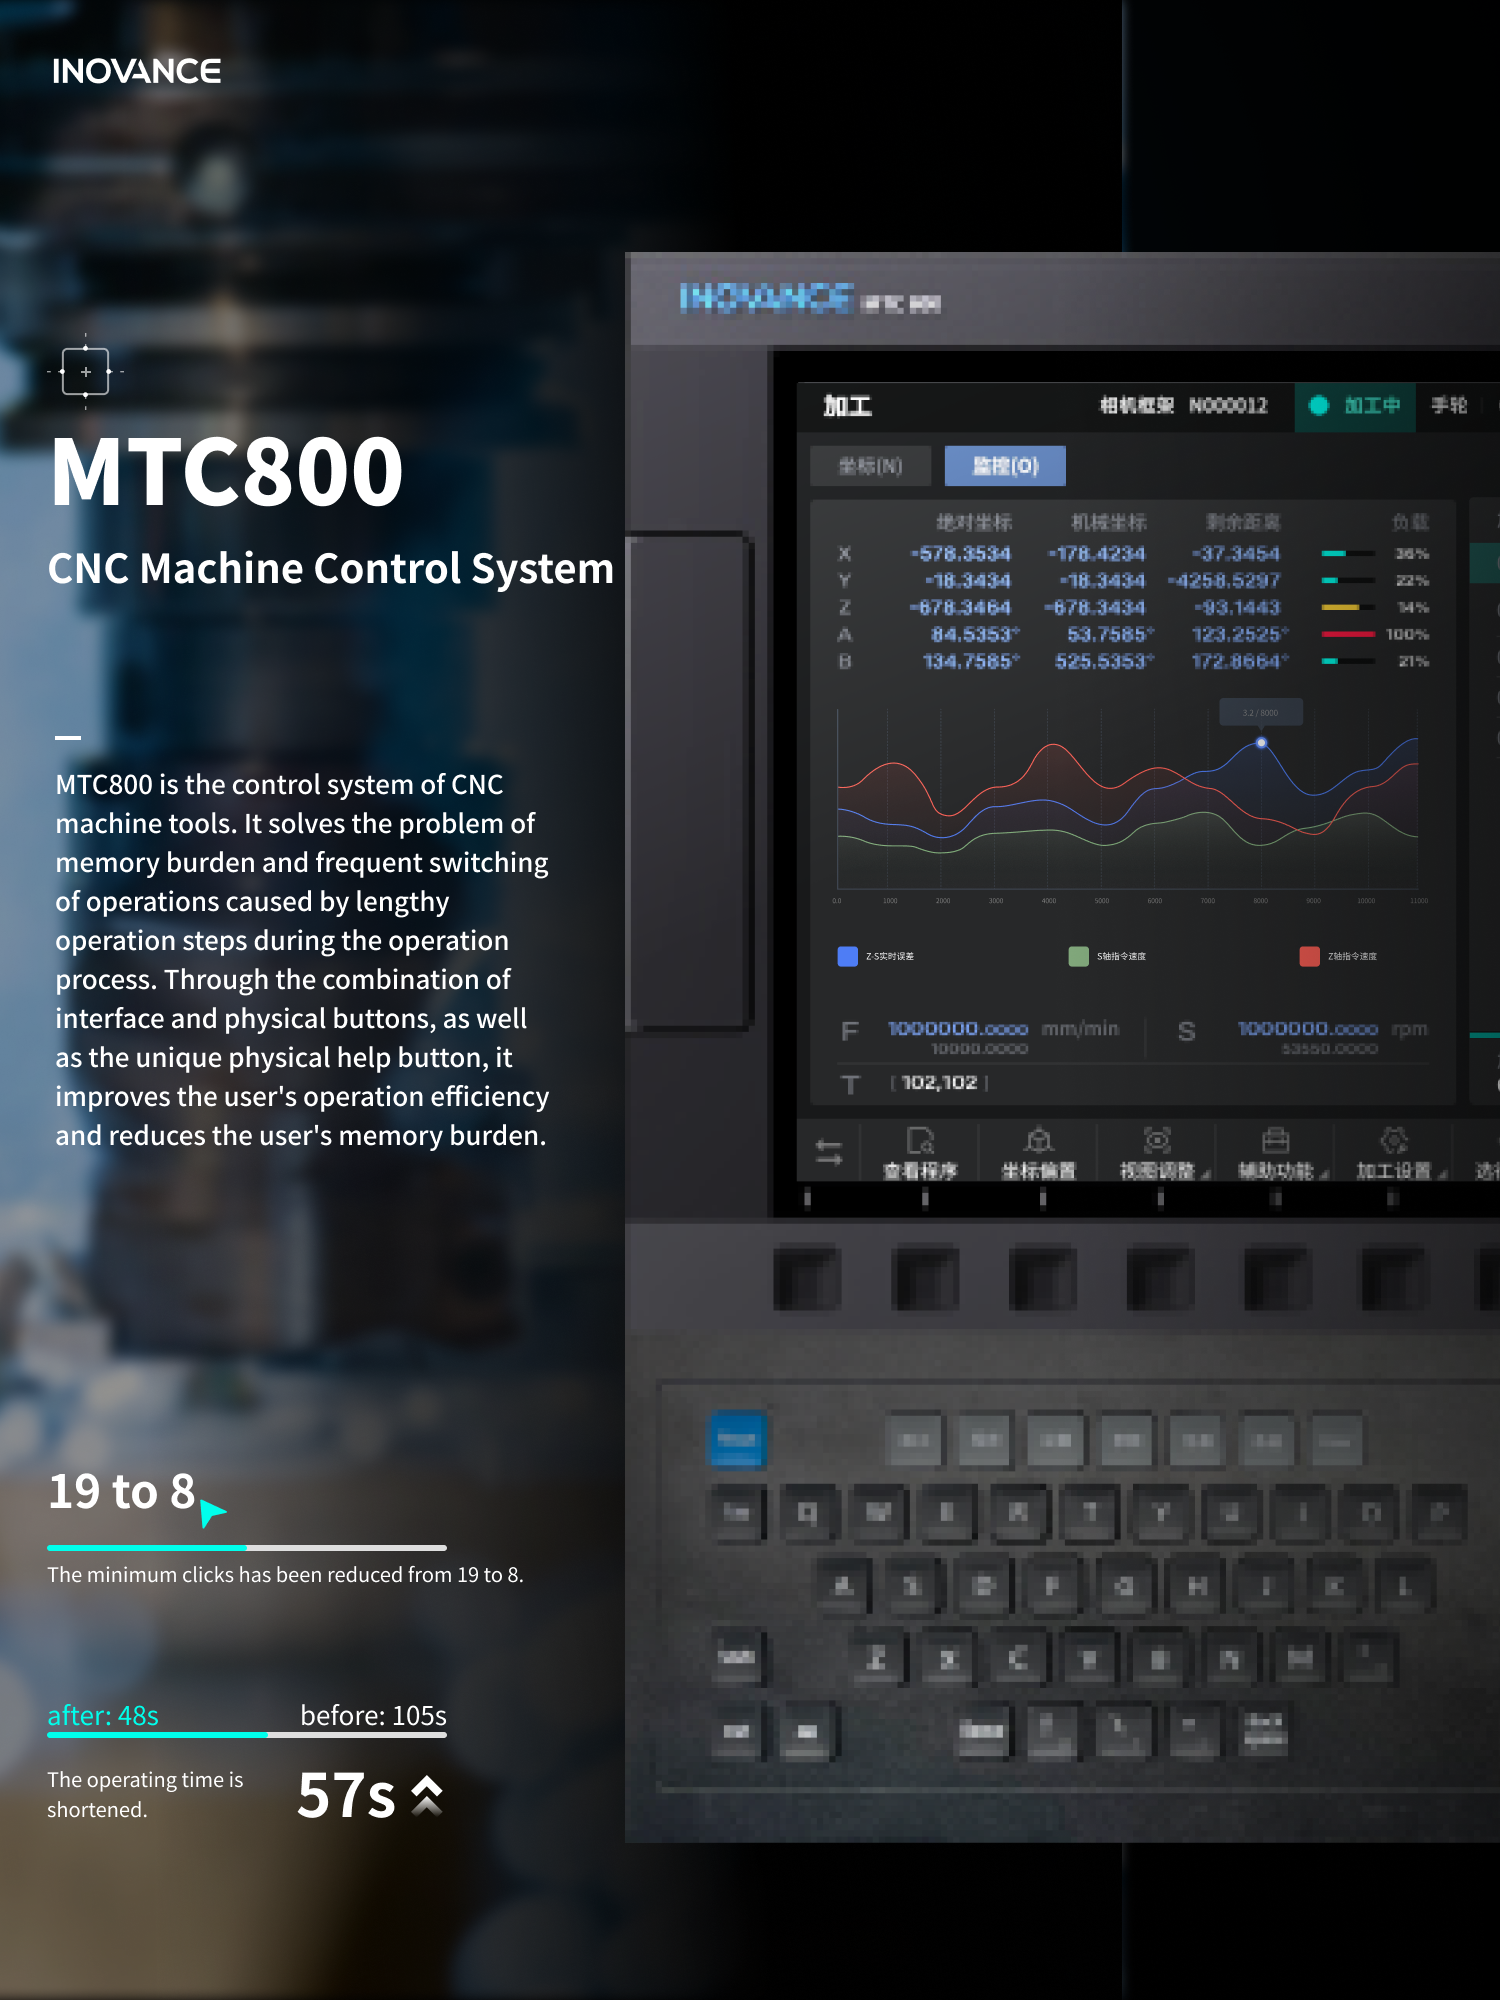 CNC Control System MTC800